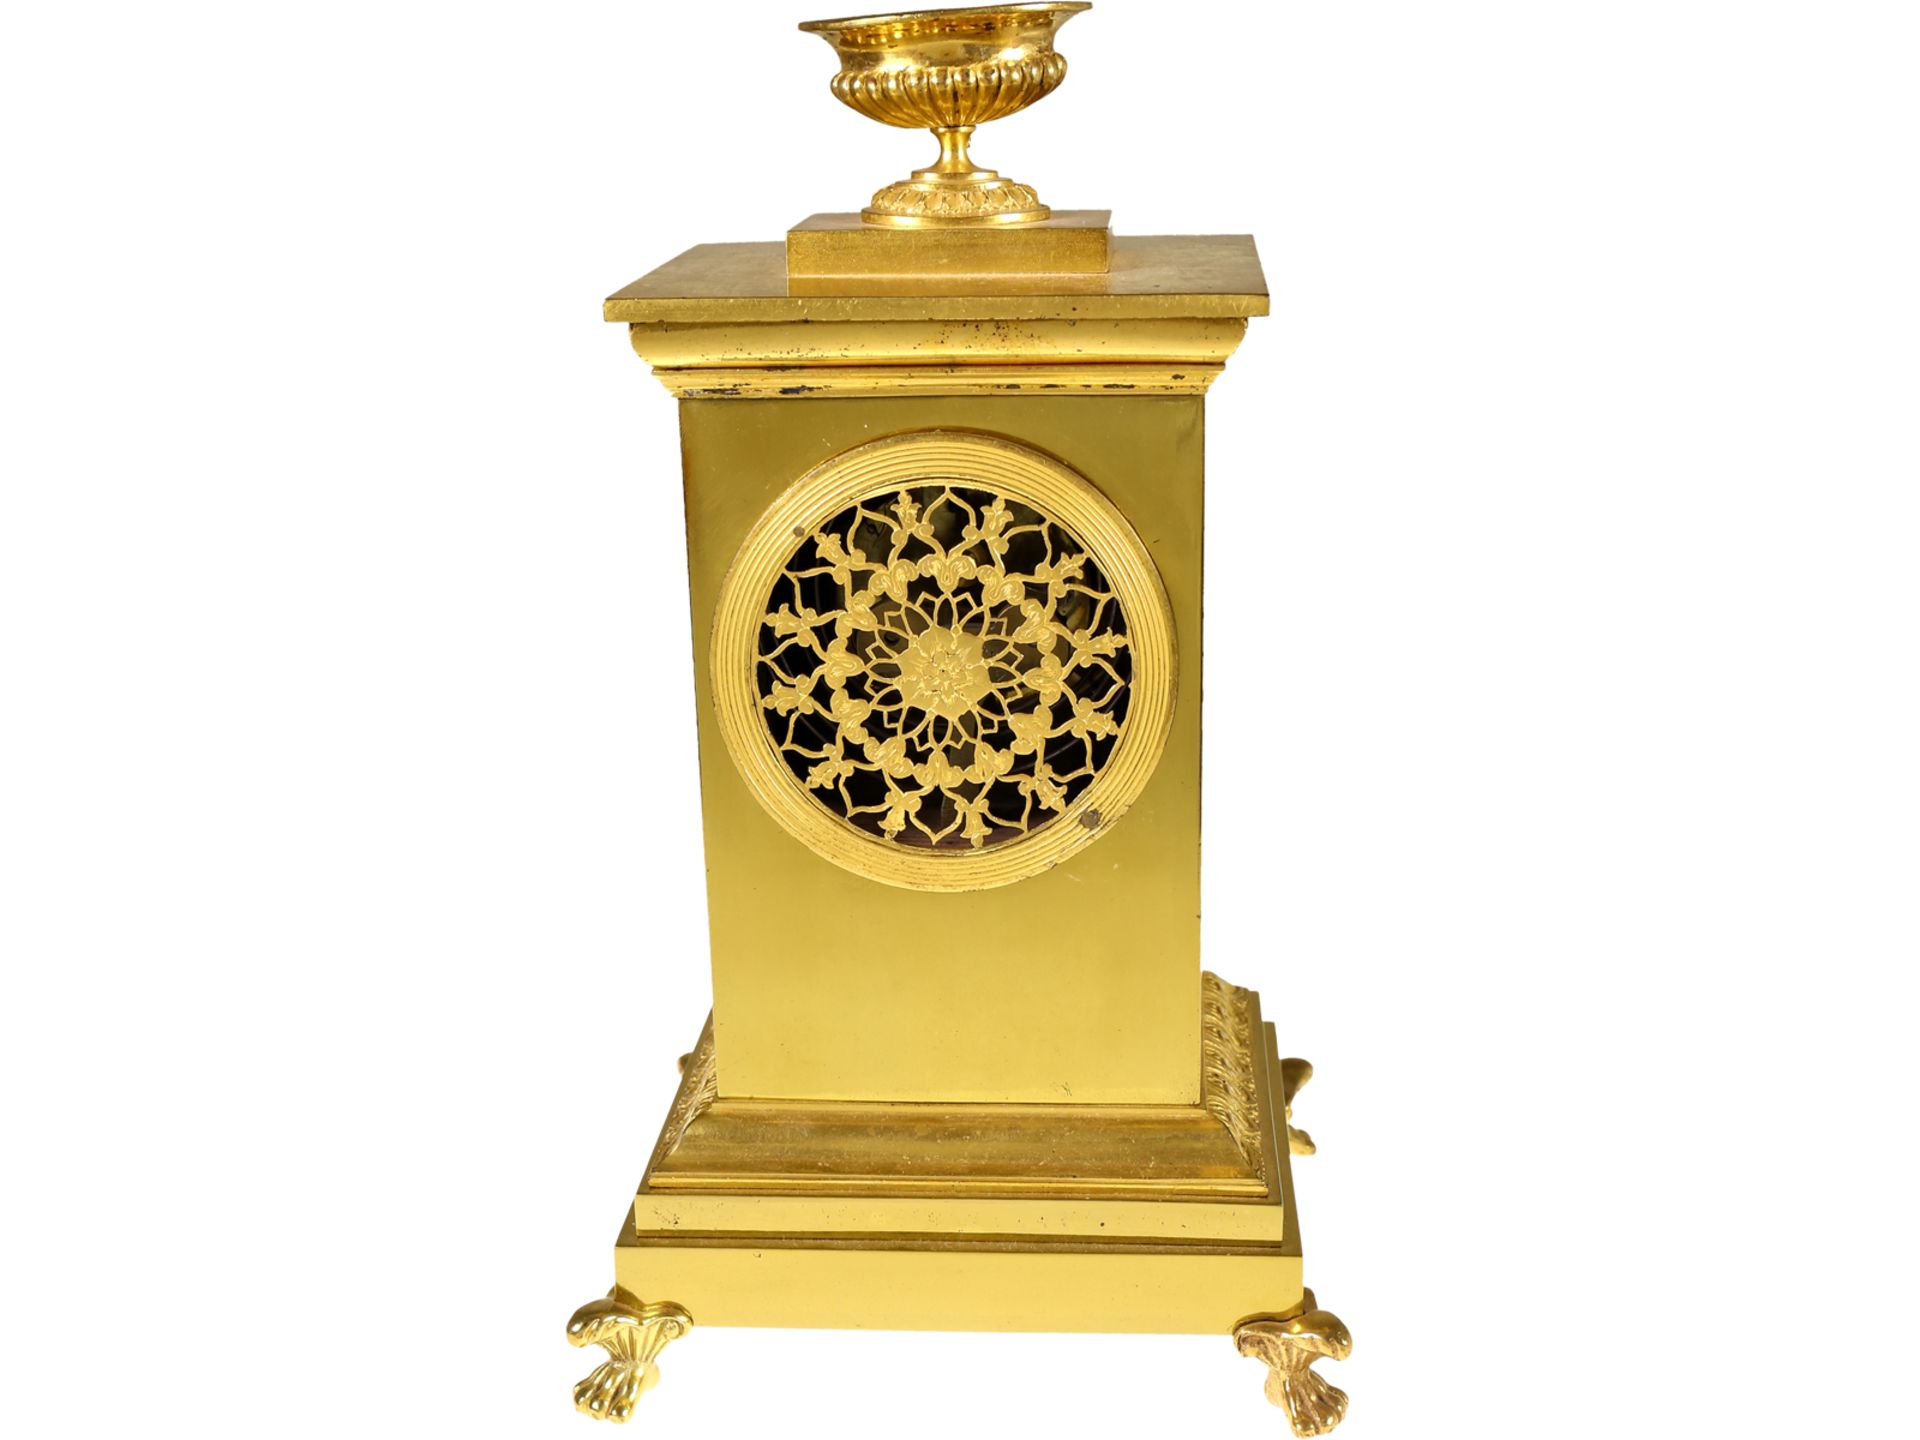 Table clock: decorative fire-gilt bronze clock around 1800, signed Miller Vienna - Image 3 of 4